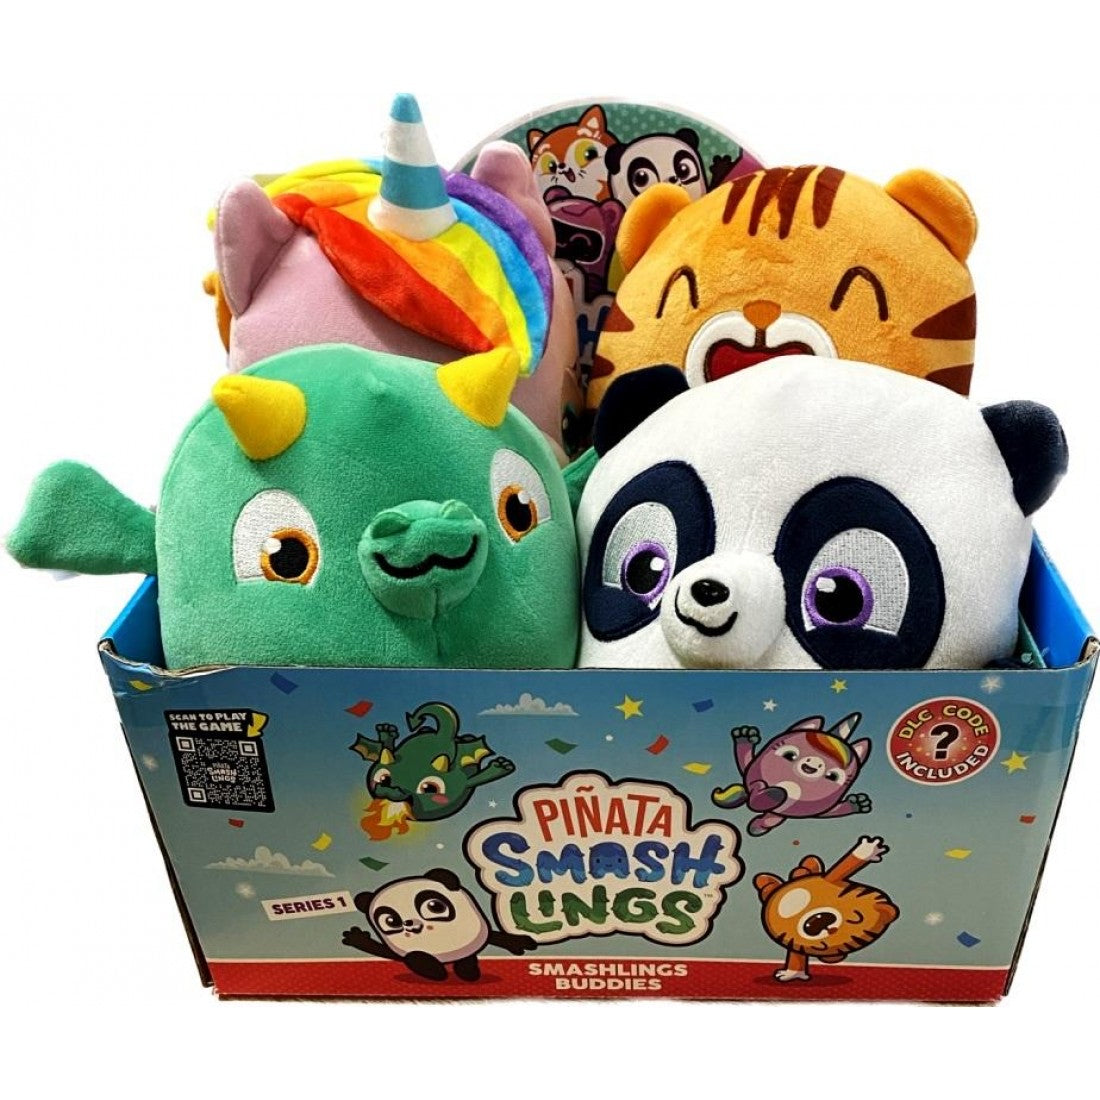 Piñata Smashlings Plush Buddies Sana the Panda 18cm Soft Toy